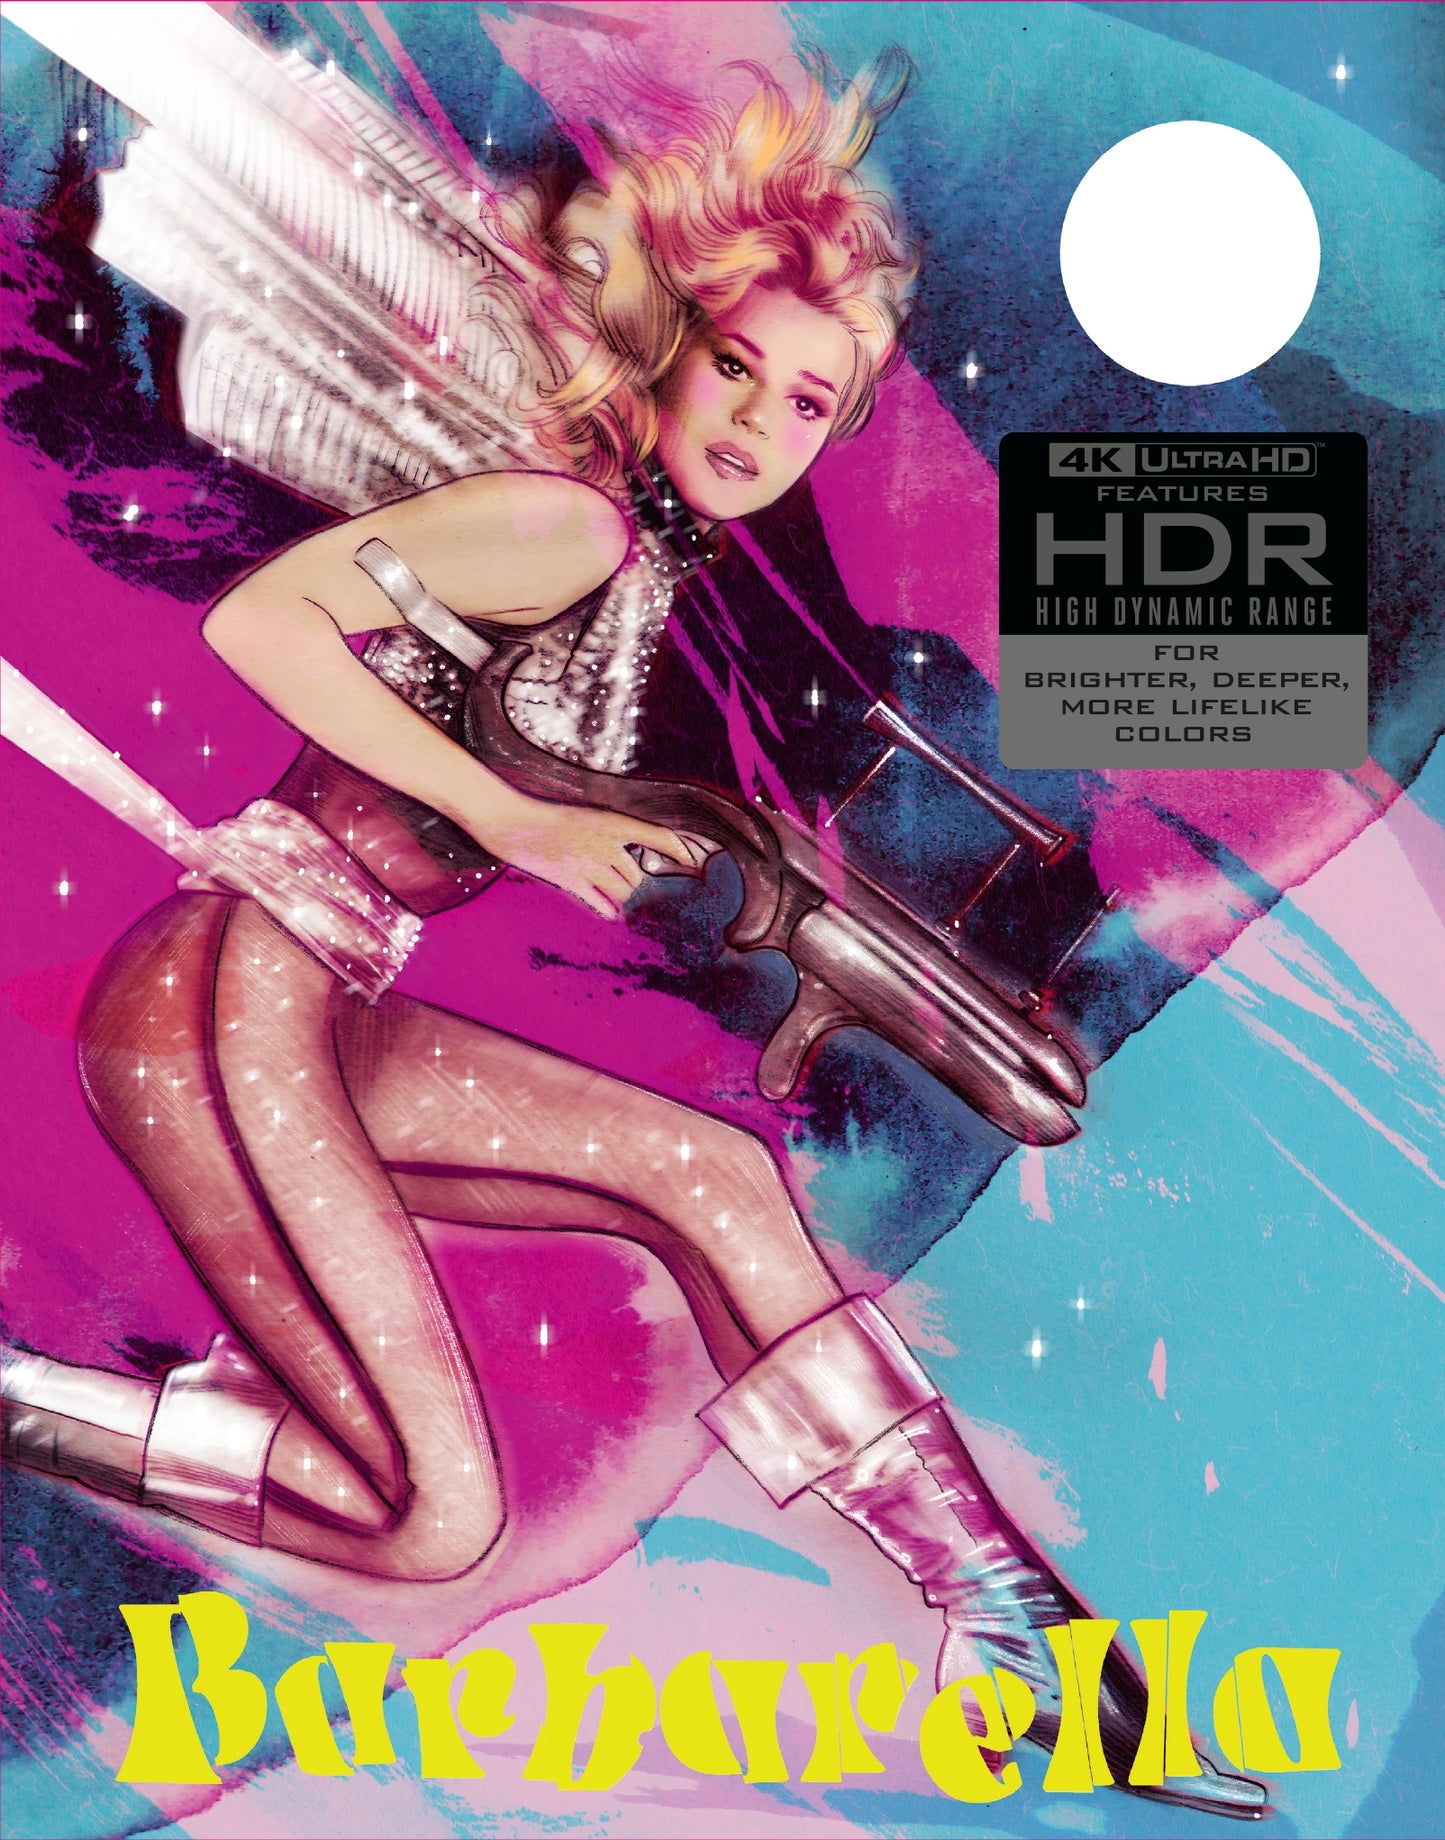 Barbarella Limited Edition 4k UHD + Blu-ray with Slip (Arrow U.S.)